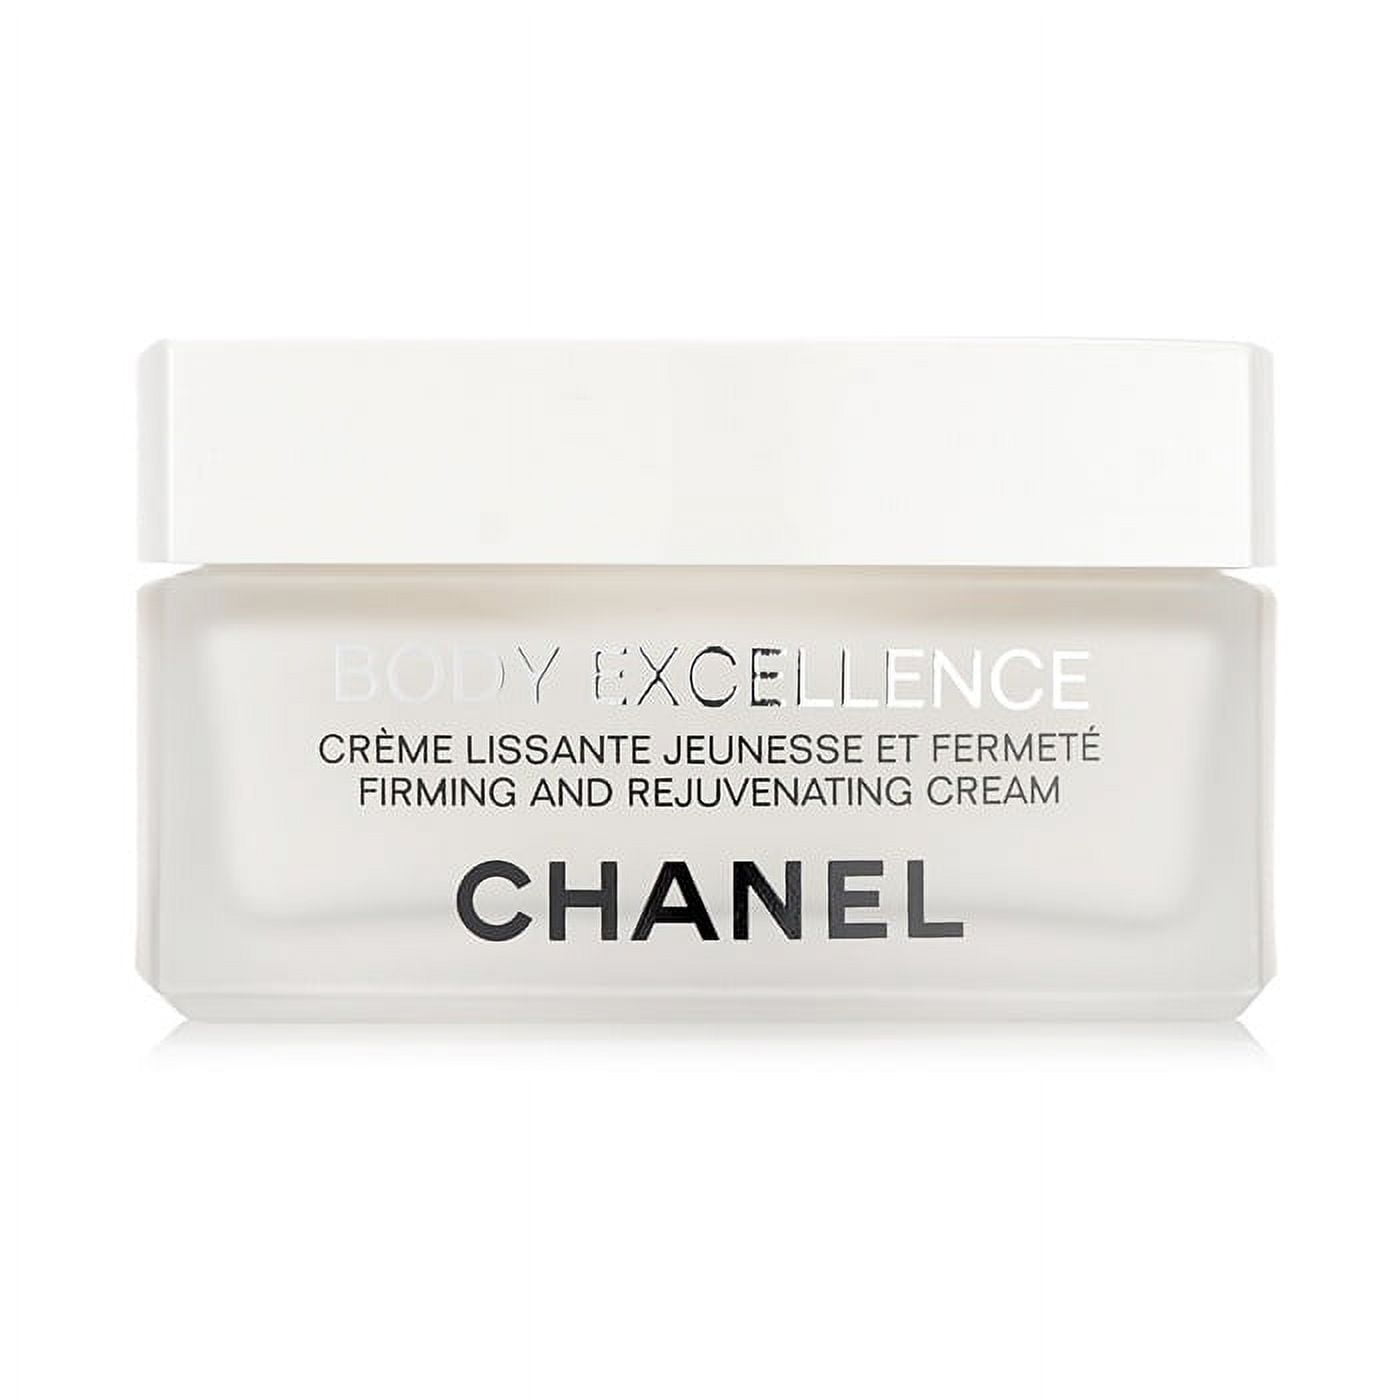 Chanel Body Excellence Firming & Rejuvenating Cream 5. oz Cream